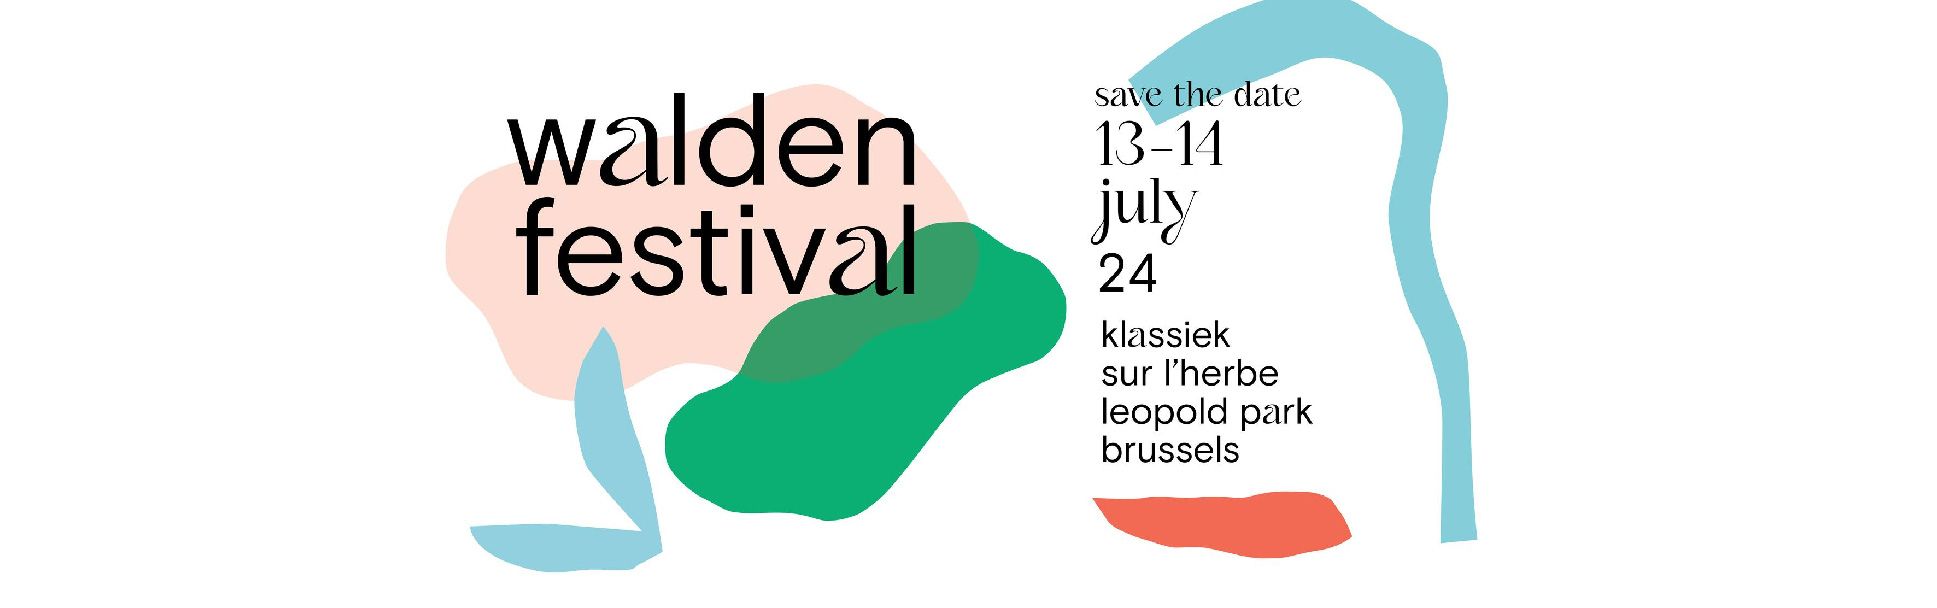 Walden Festival header